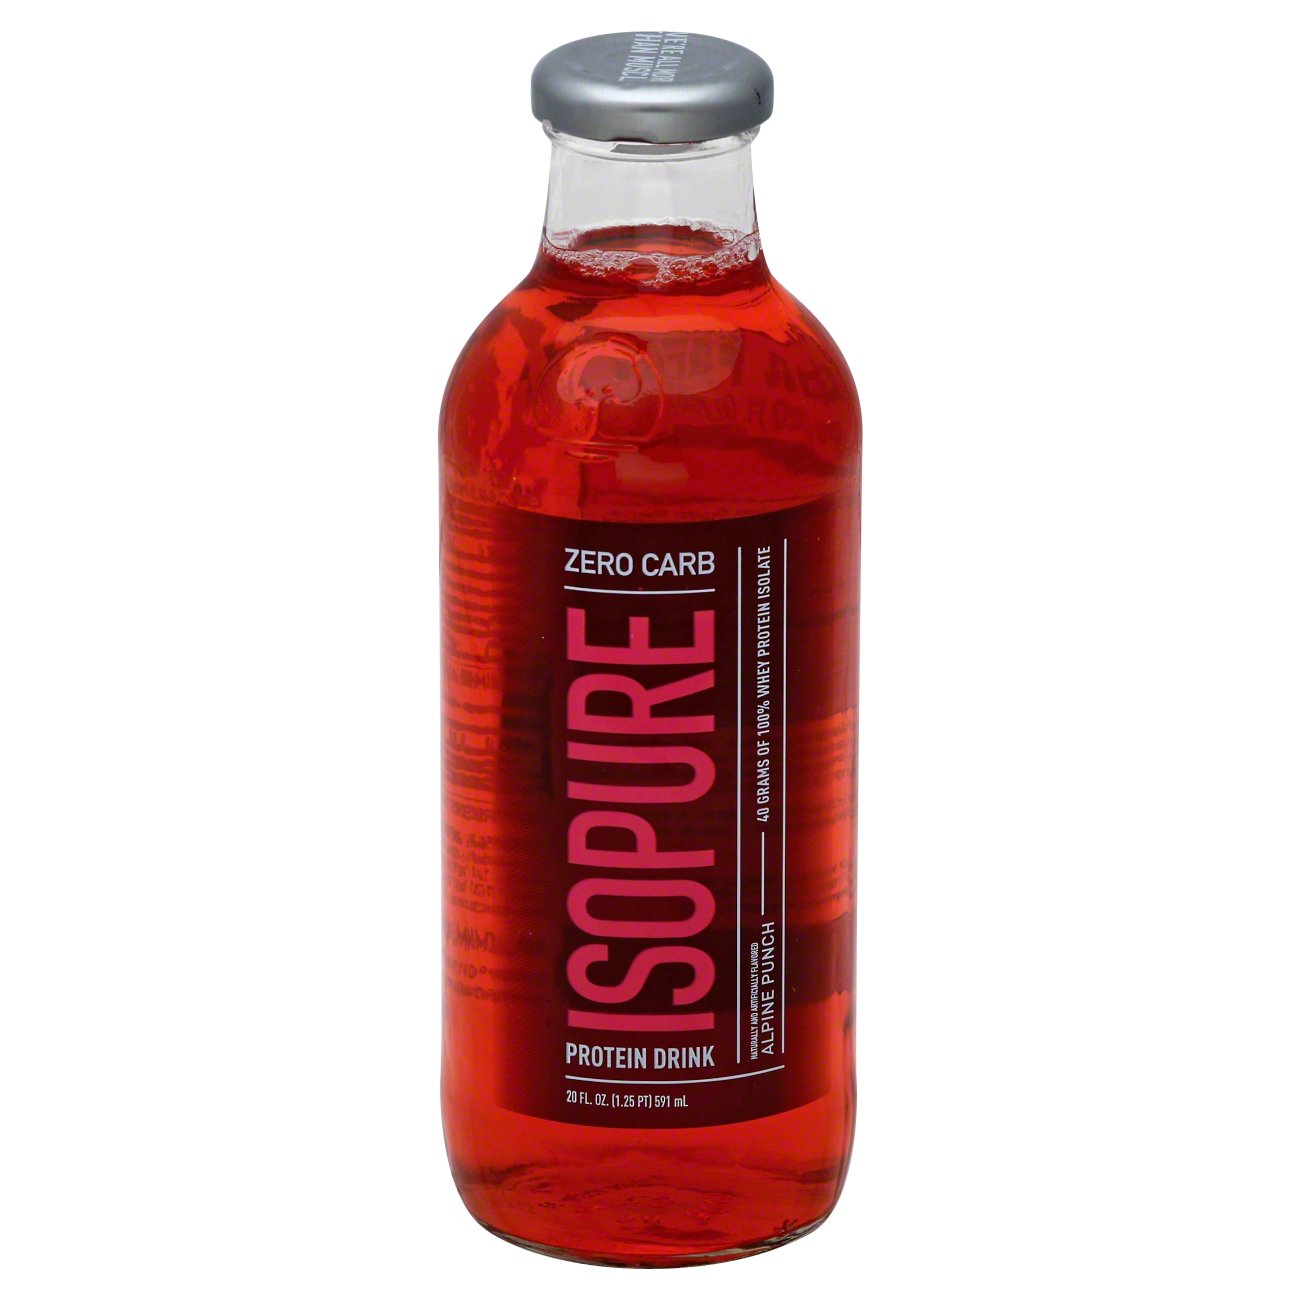 Isopure Zero Carb 40g Protein Drink - Alpine Punch